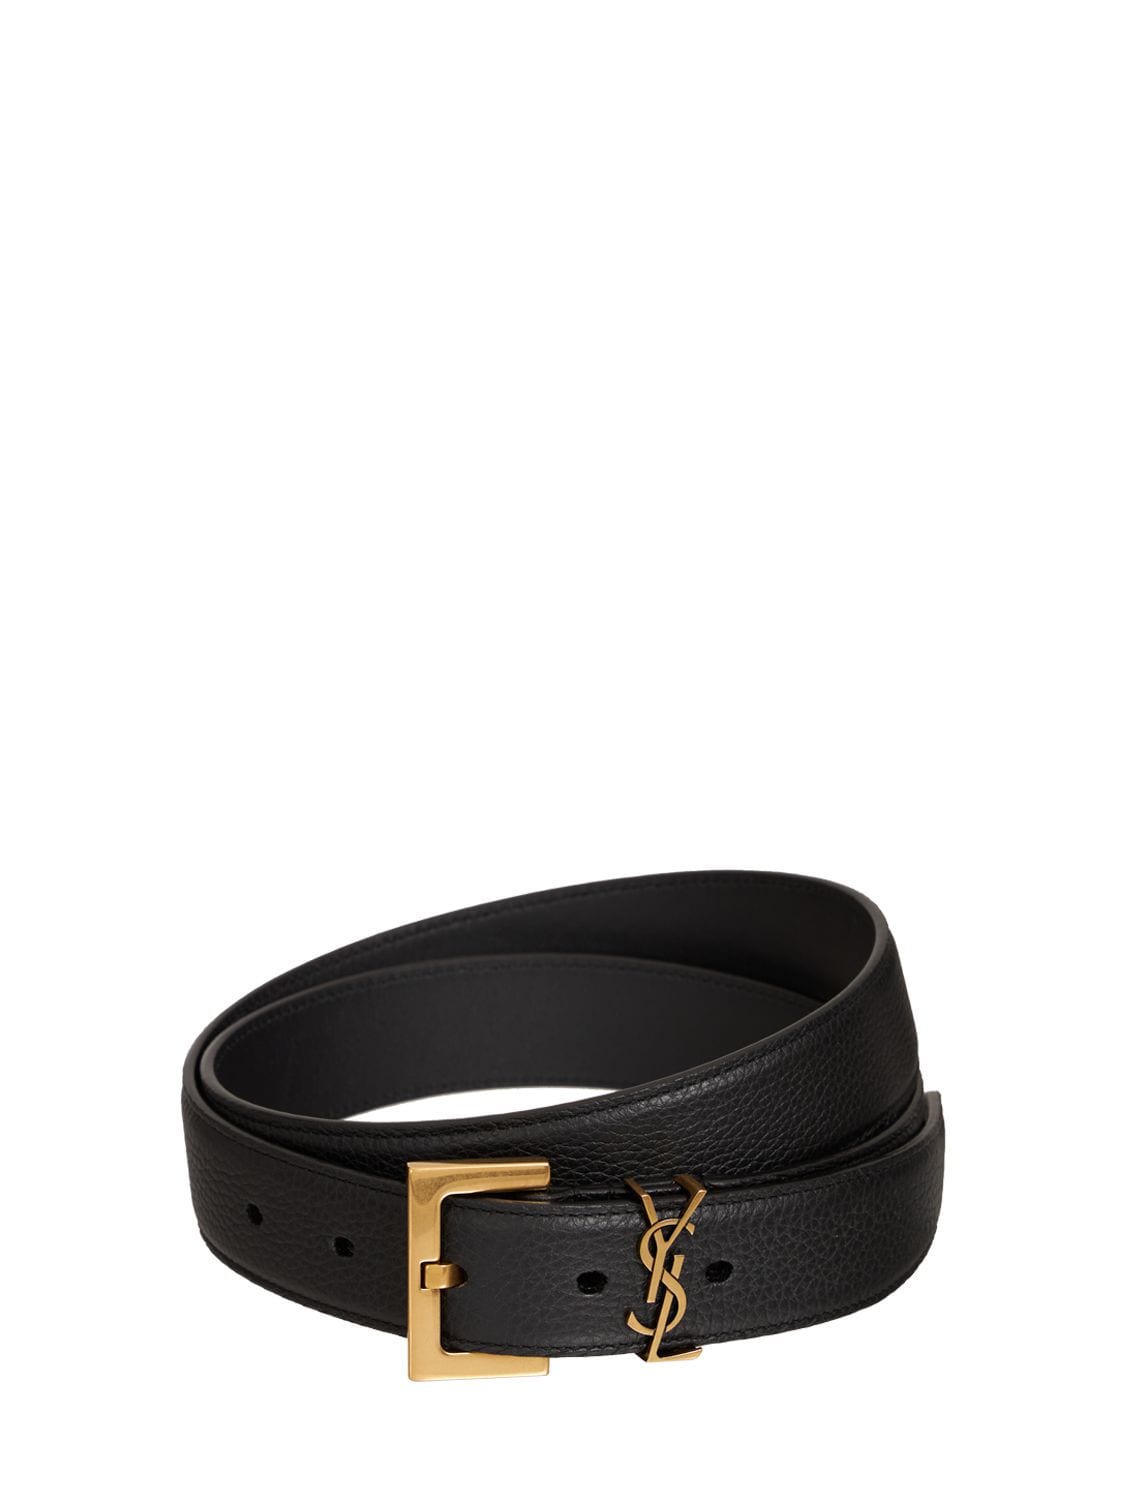 Saint Laurent 3cm Ysl Leather Belt In Black